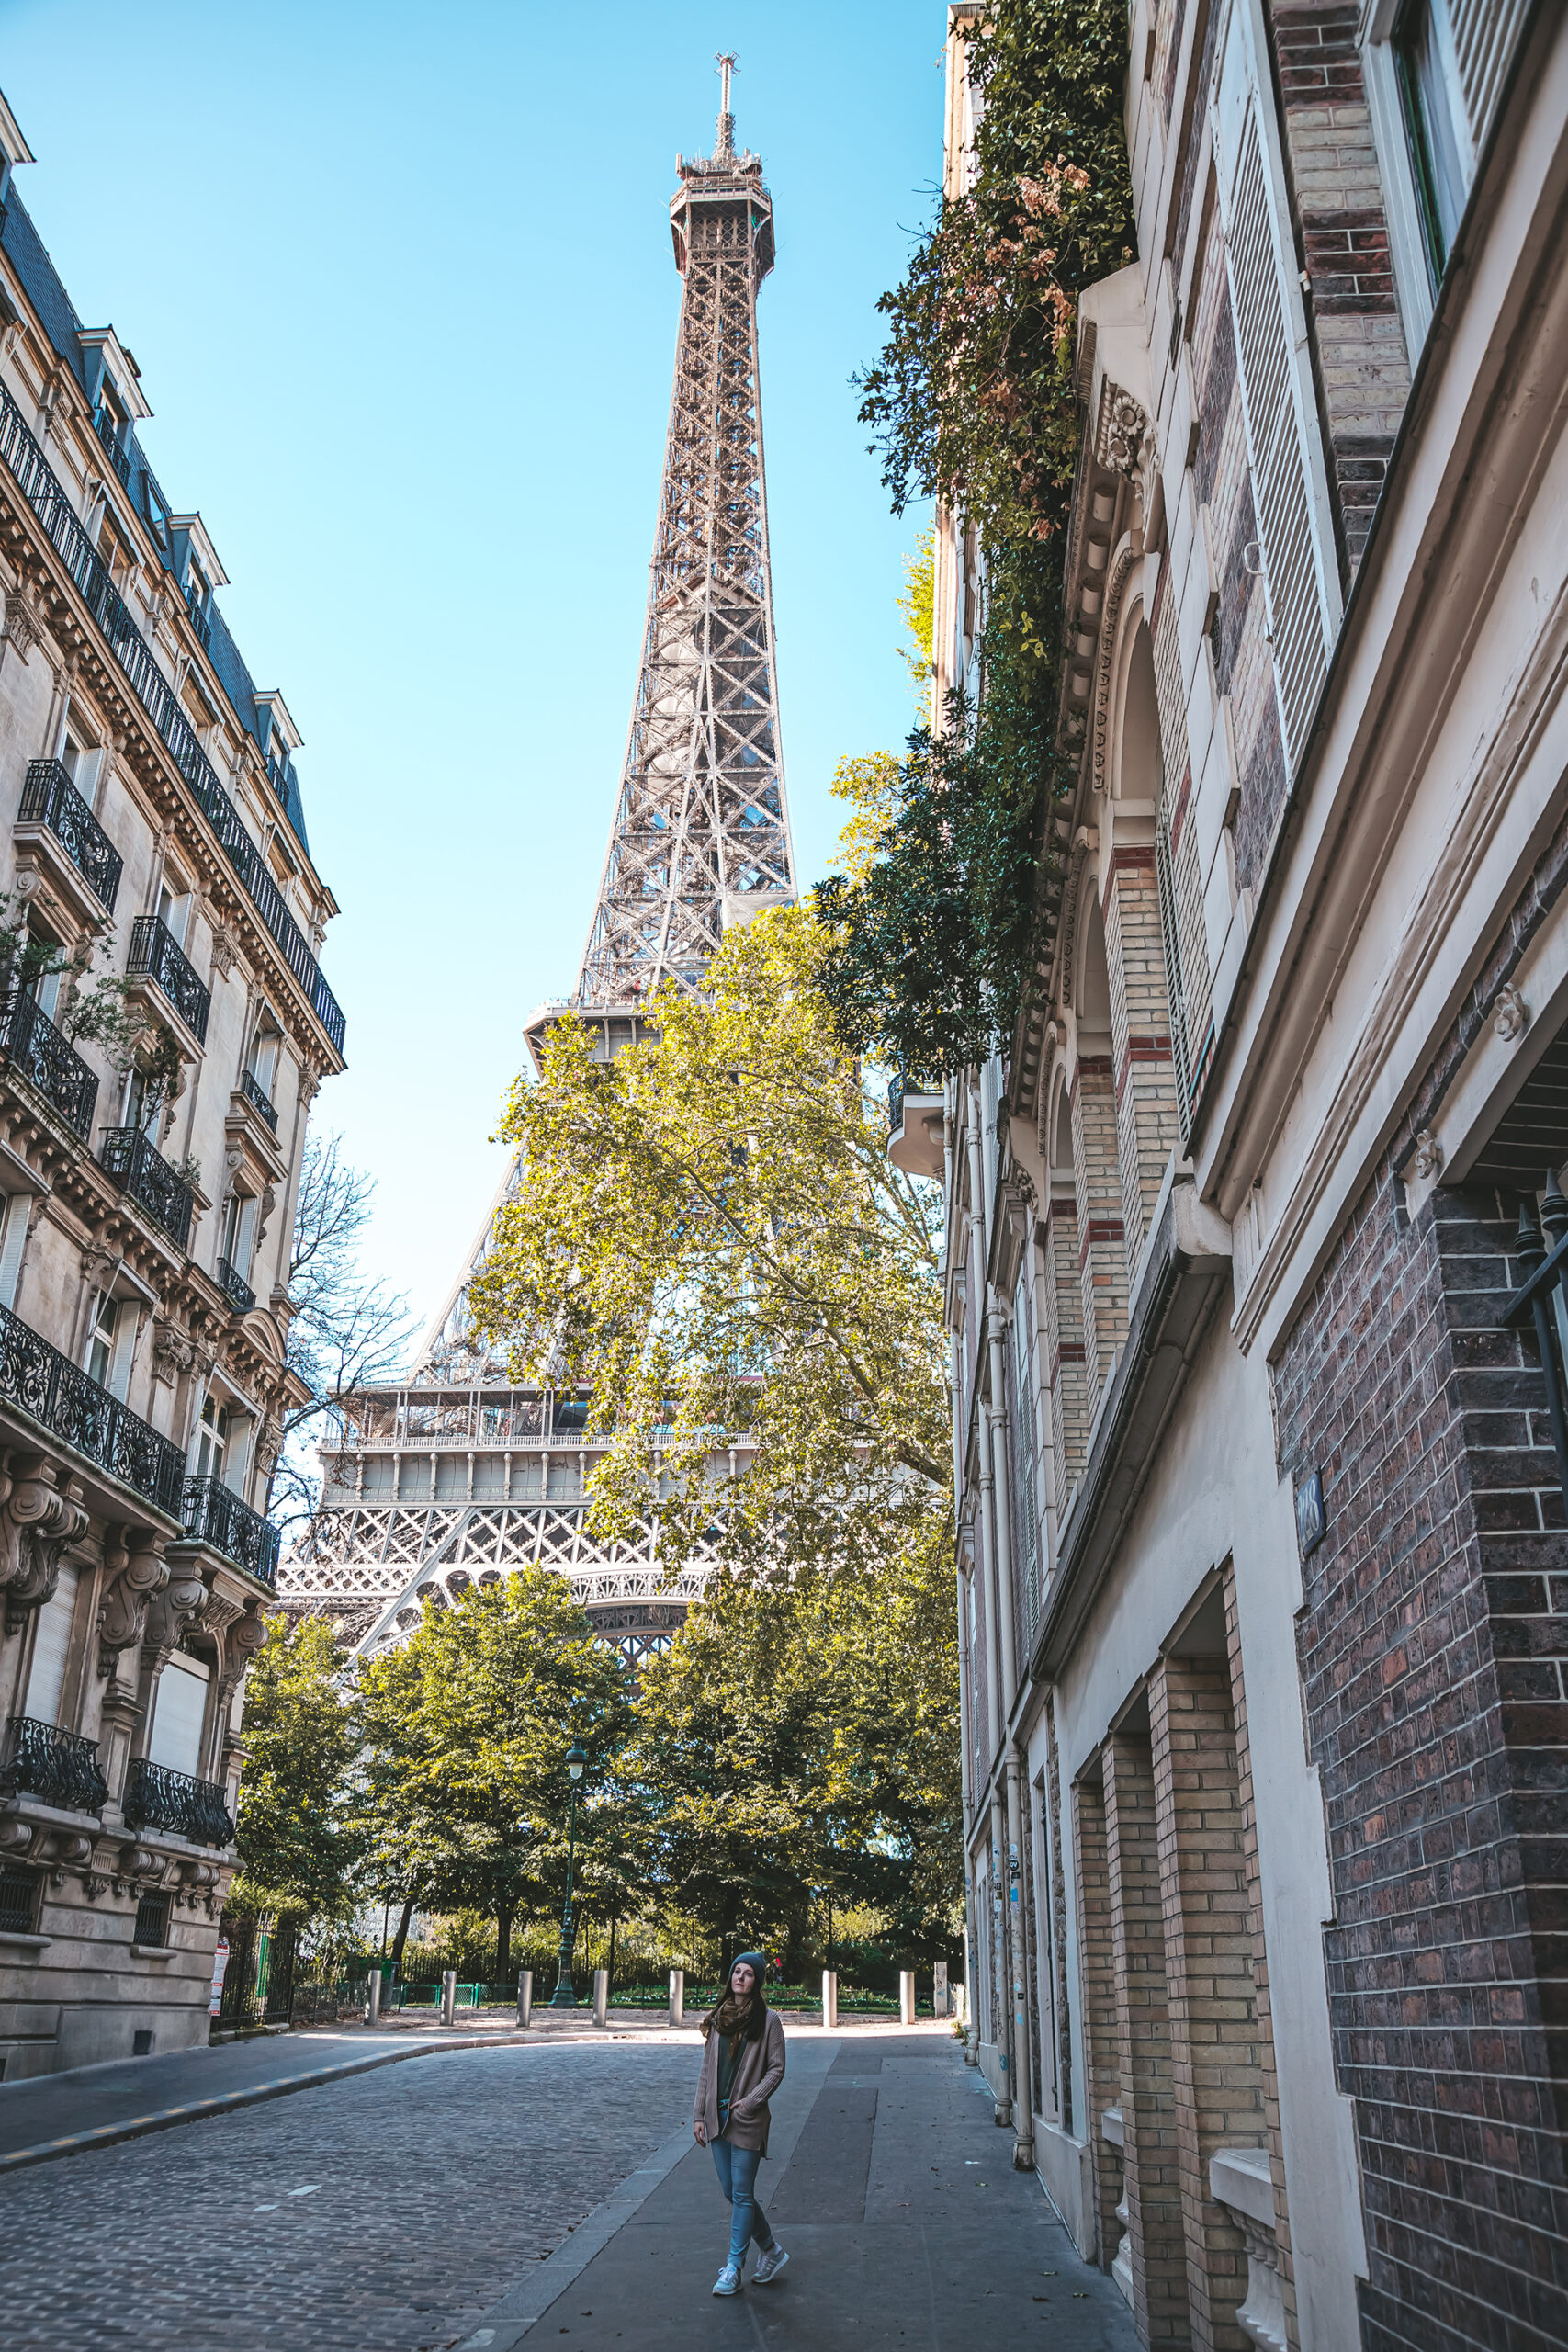 Eiffelturm in Paris   
© Marielle Janotta - My Travel Island